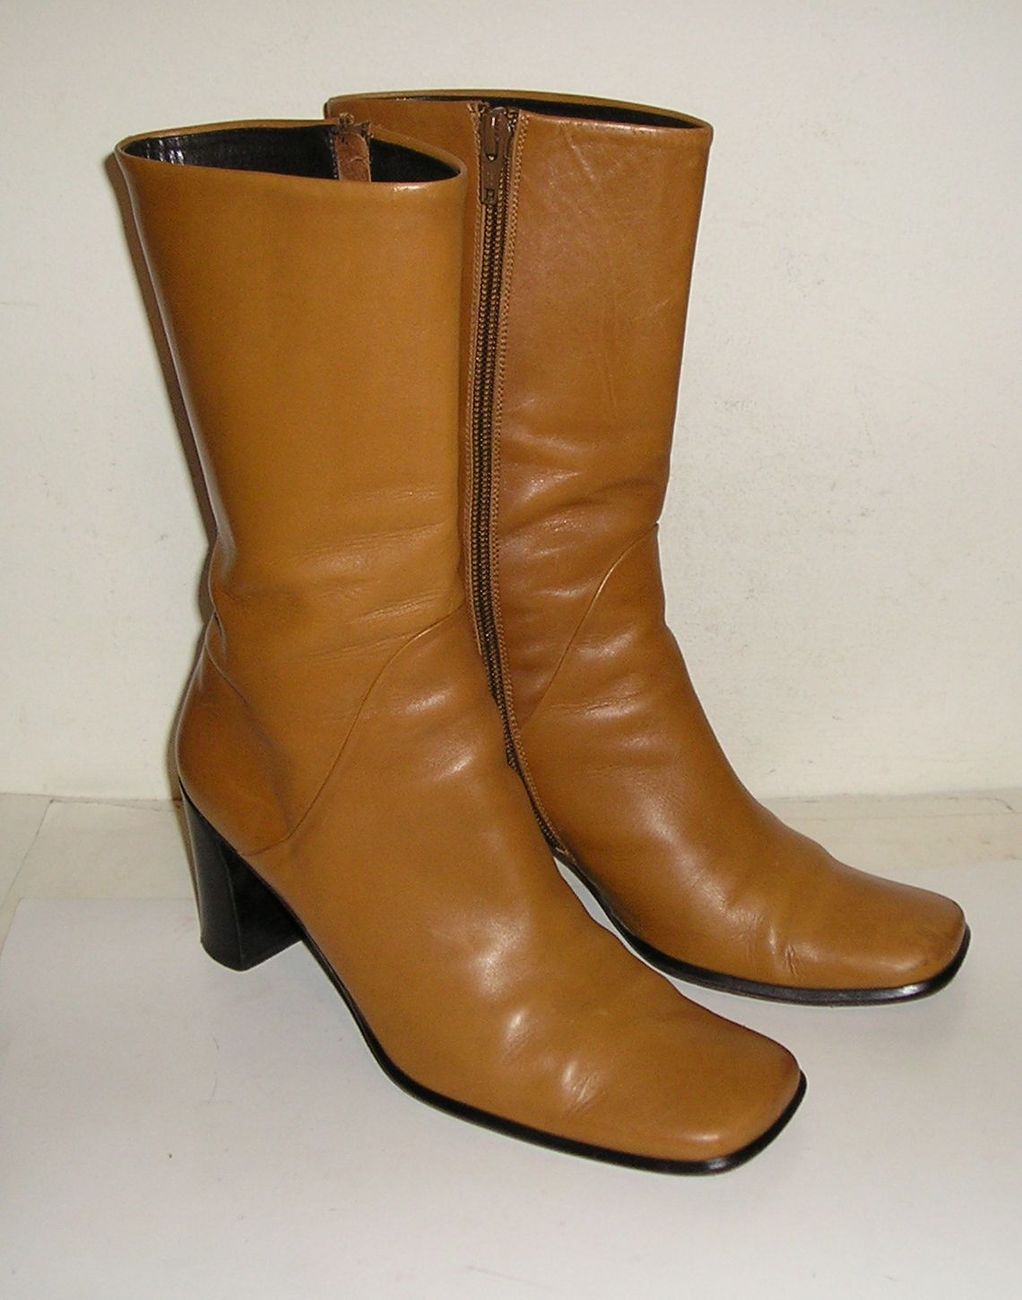 VIA SPIGA Italian Women's Fashion Dress Camel Leather Boots Shoes 6 M B ...